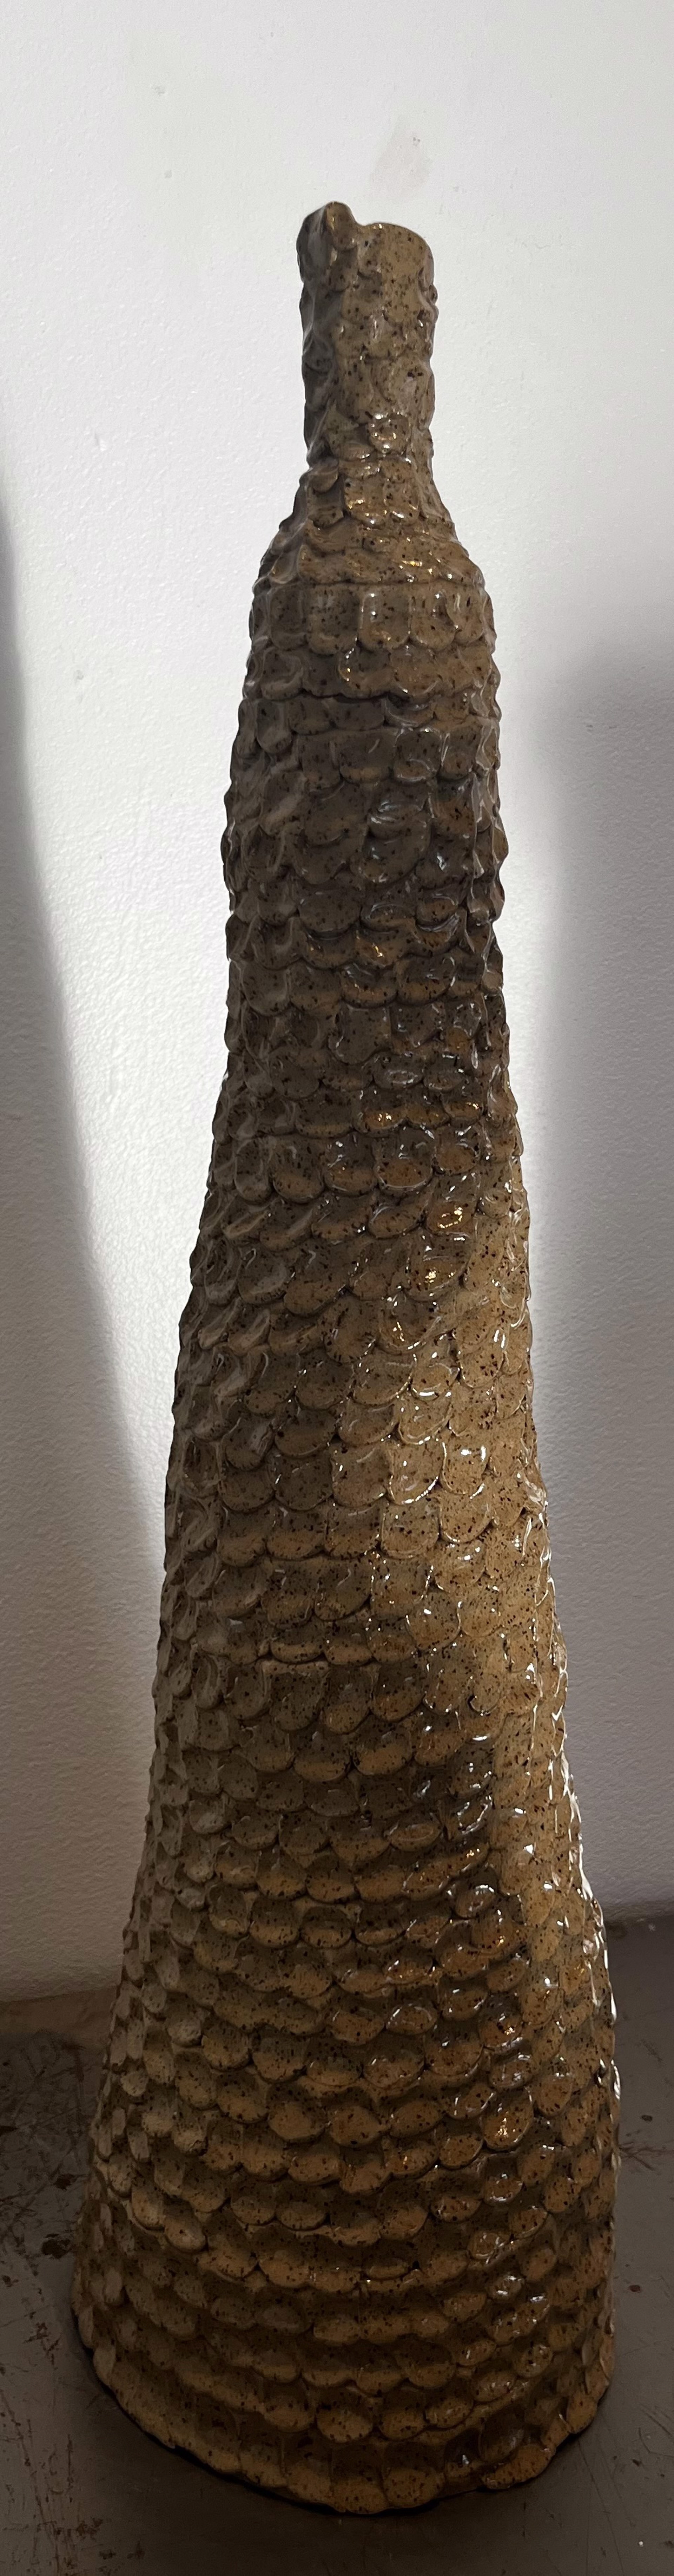 ET Vase 1 by Sarah Hummel Jones